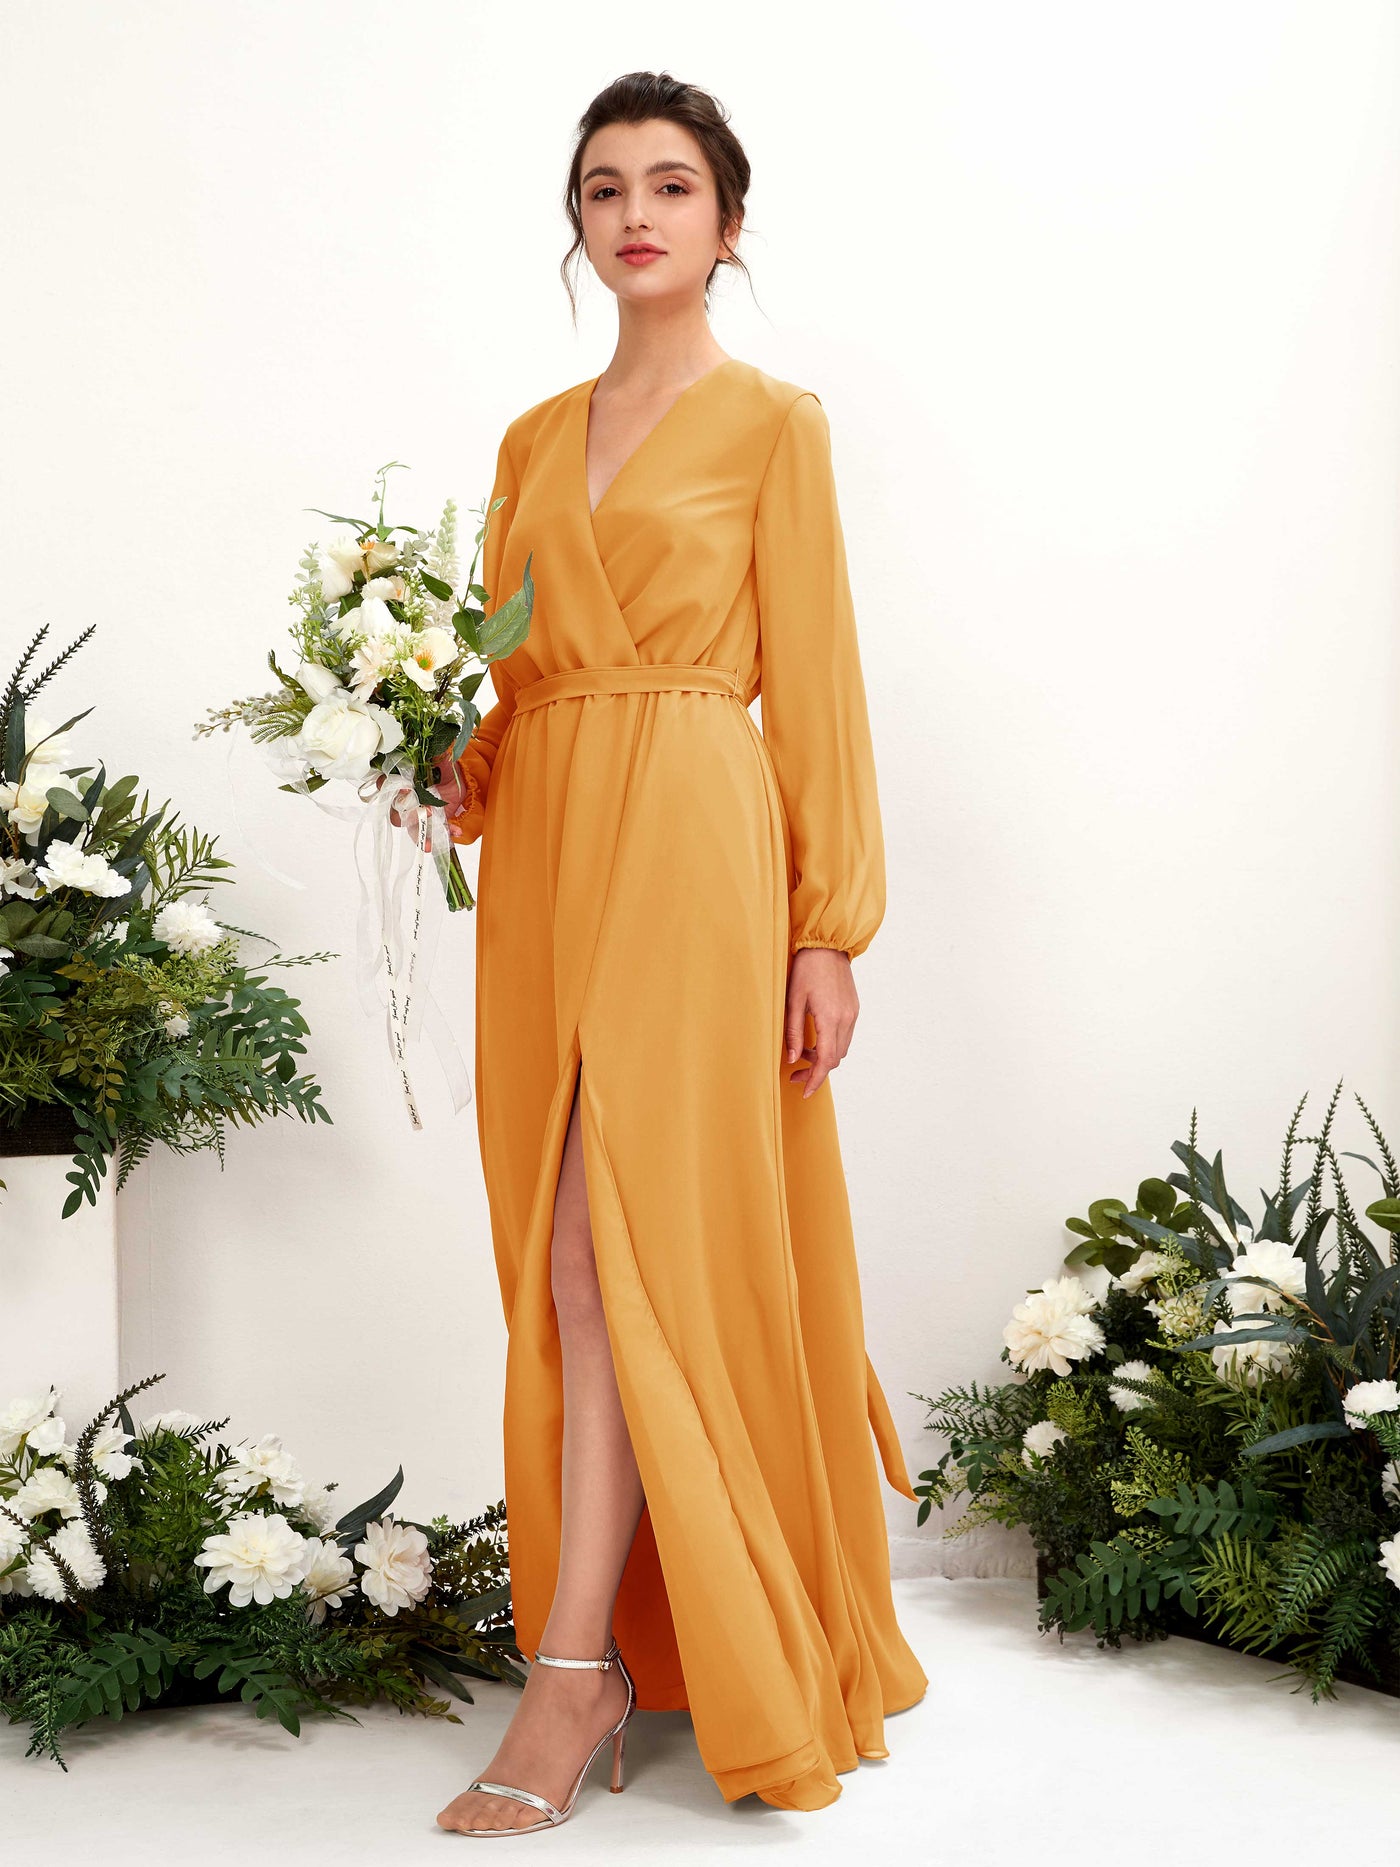 Mango Bridesmaid Dresses Bridesmaid Dress A-line Chiffon V-neck Full Length Long Sleeves Wedding Party Dress (81223202)#color_mango